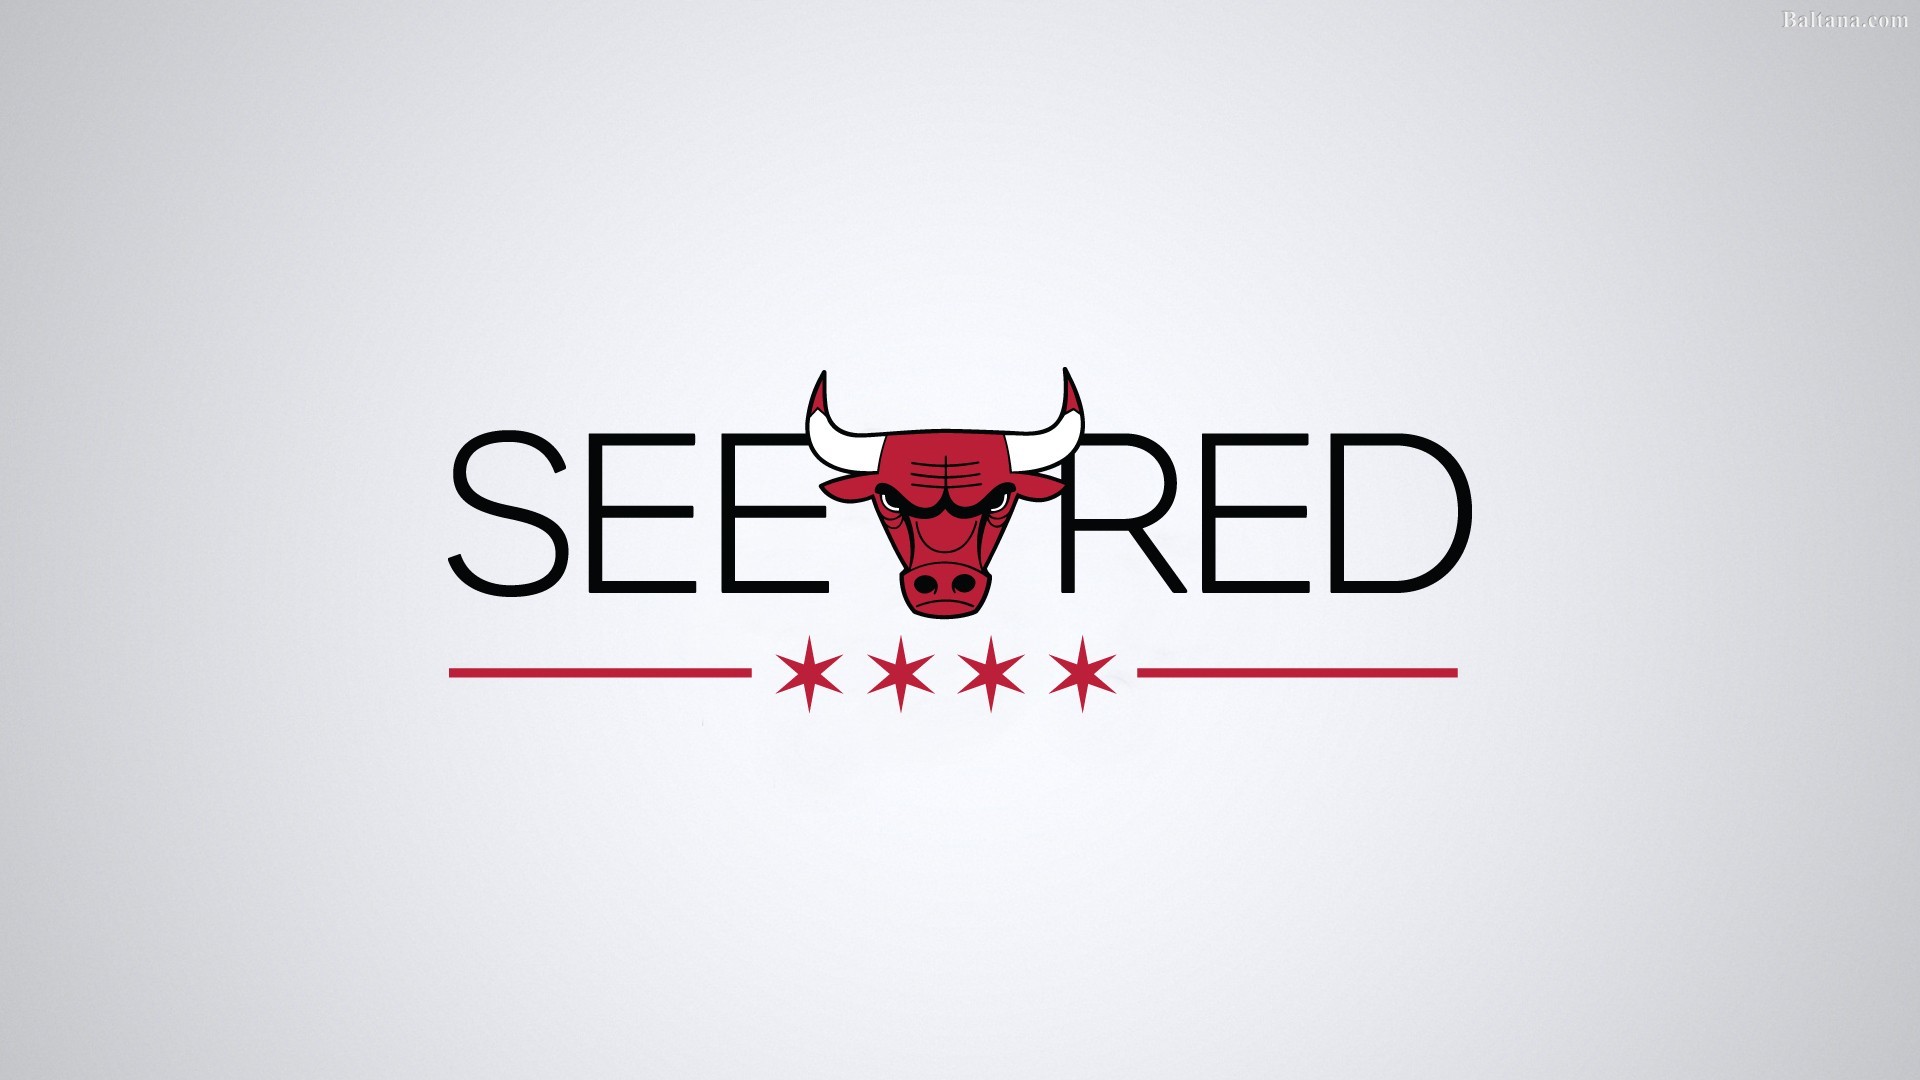 Free Download Chicago Bulls Wallpaper Hd 2017 - Chicago Bulls , HD Wallpaper & Backgrounds